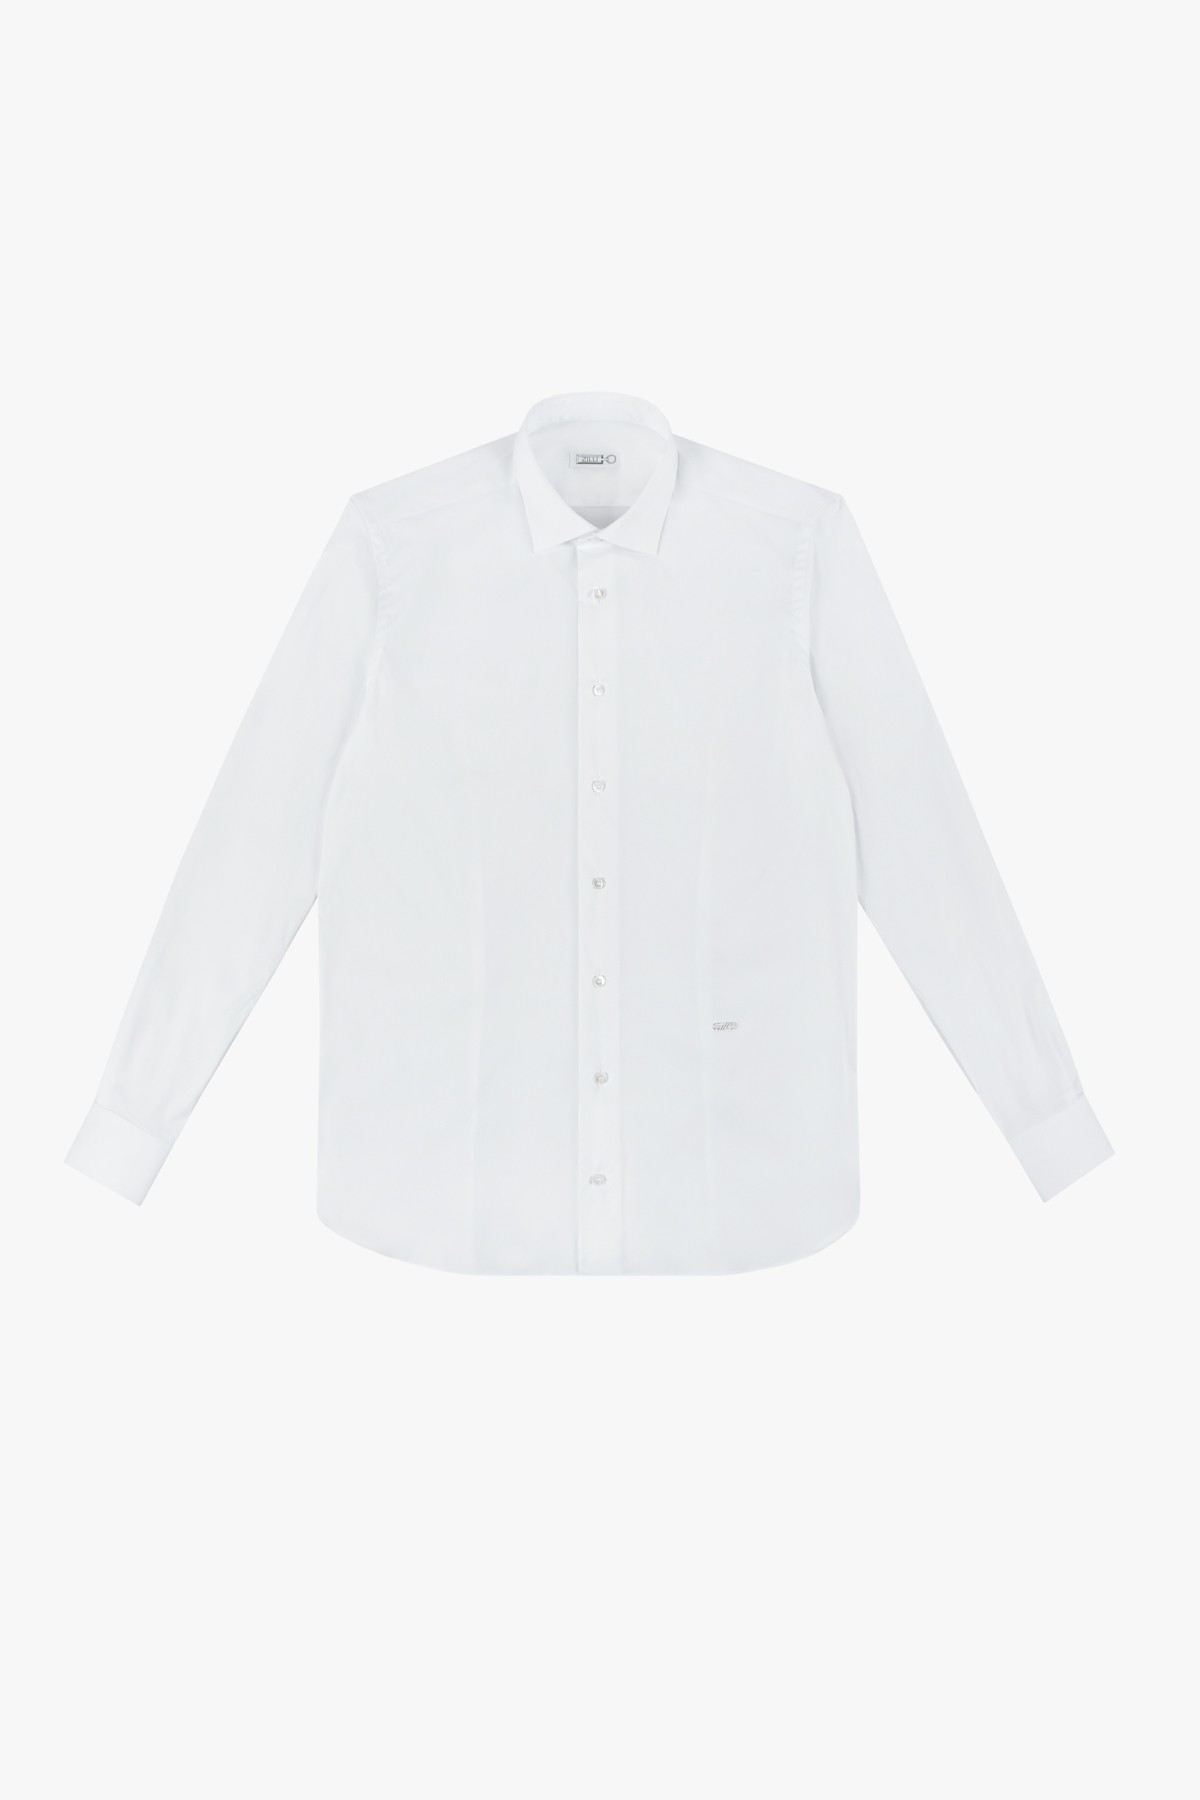 White shirt, 